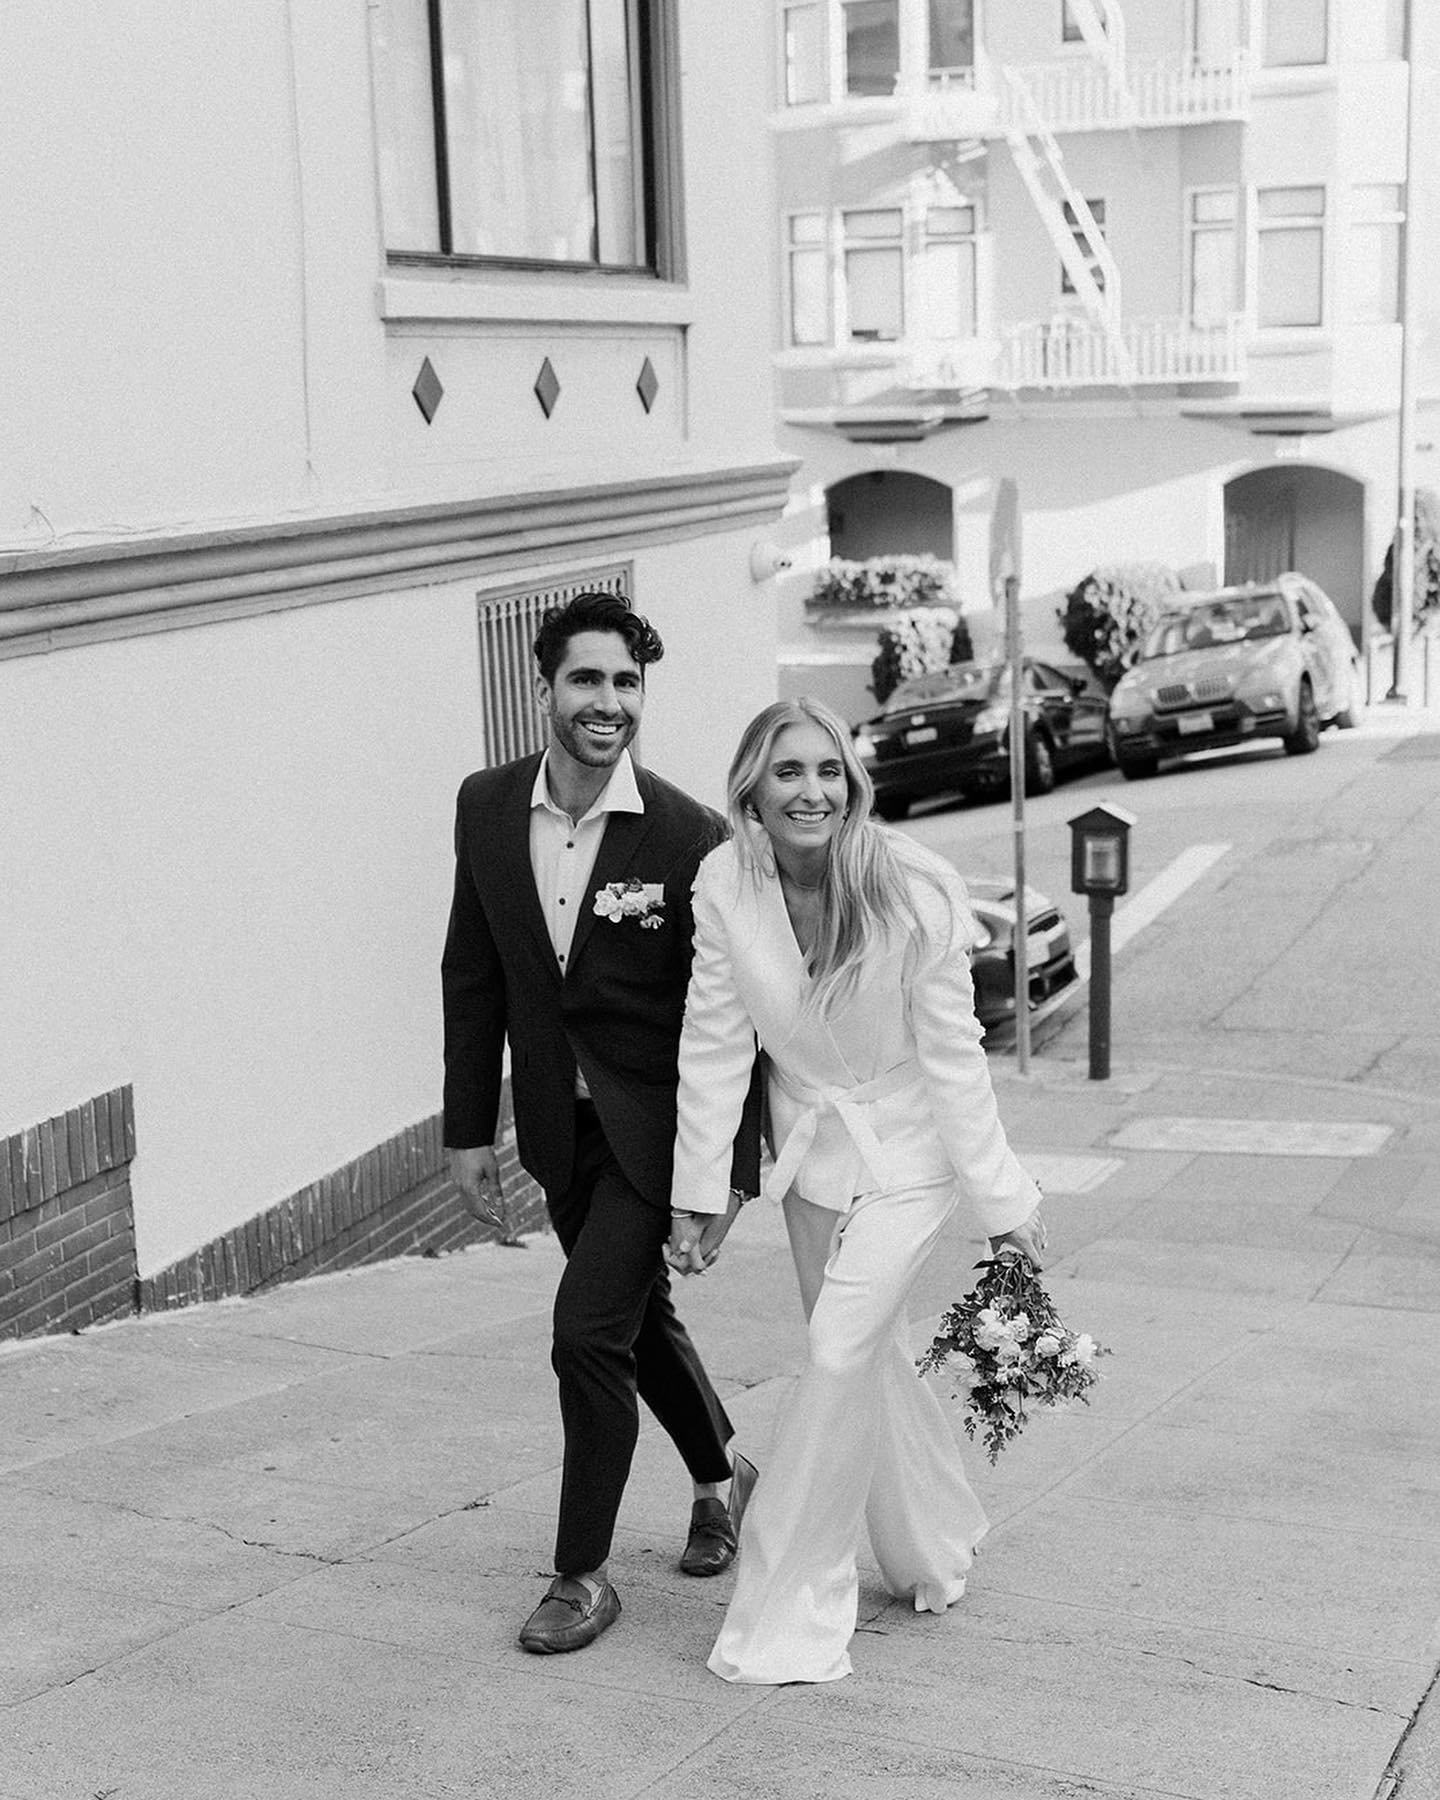 Alyssa and Andy, shot by Torez last year in San Francisco.

Couple: @lysssbomb @schuloosse 
Photography: @torezmarguerite 

#kladek #sfbride #elopment #bridalsuits #modernbride #cityhallwedding #californiawedding #sfwedding #destinationwedding